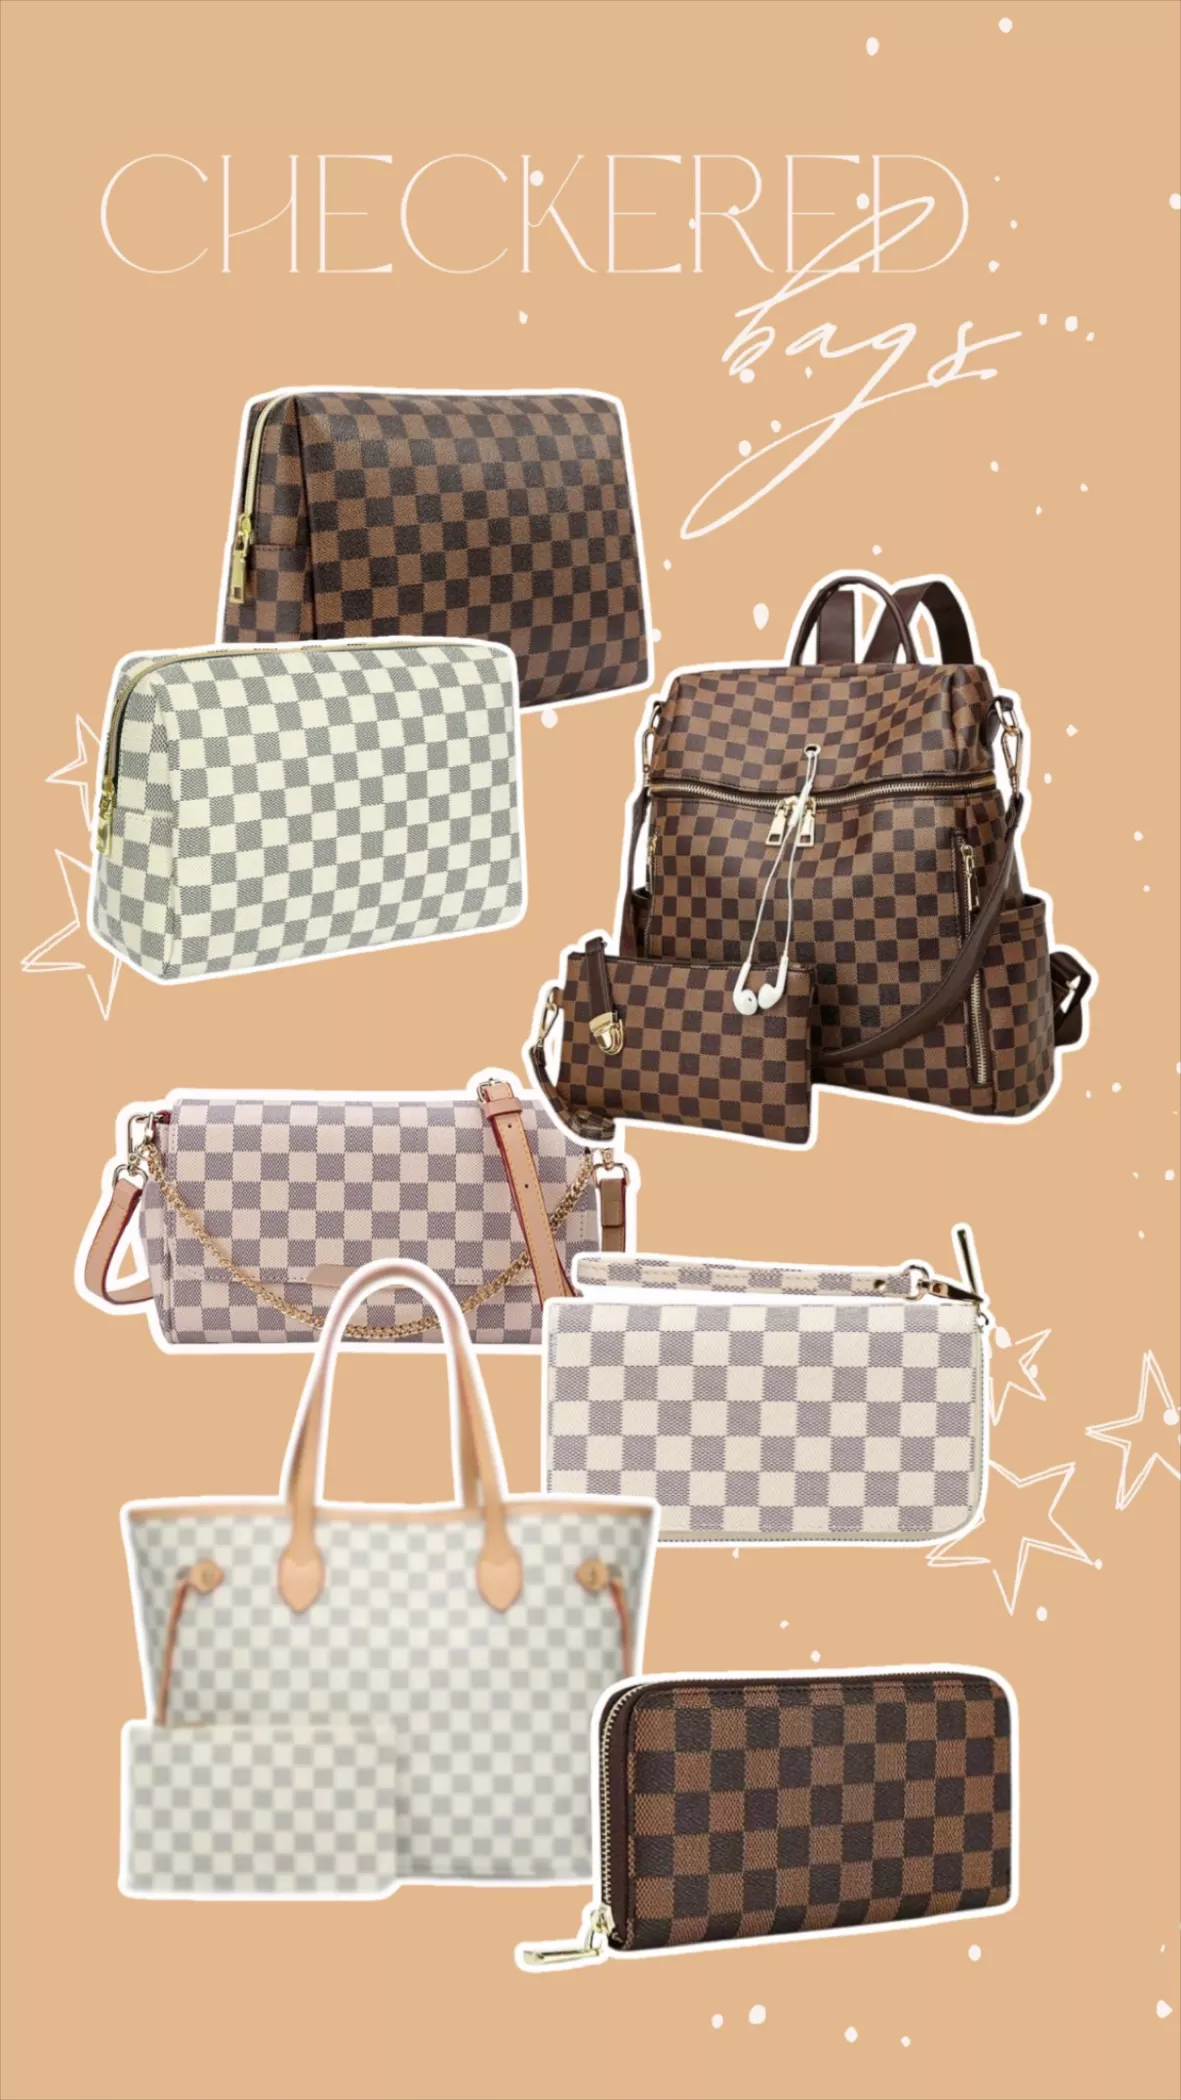 Aokur Makeup Bag Cosmetic Bag Travelling Checkered Make Up Bag Organiz